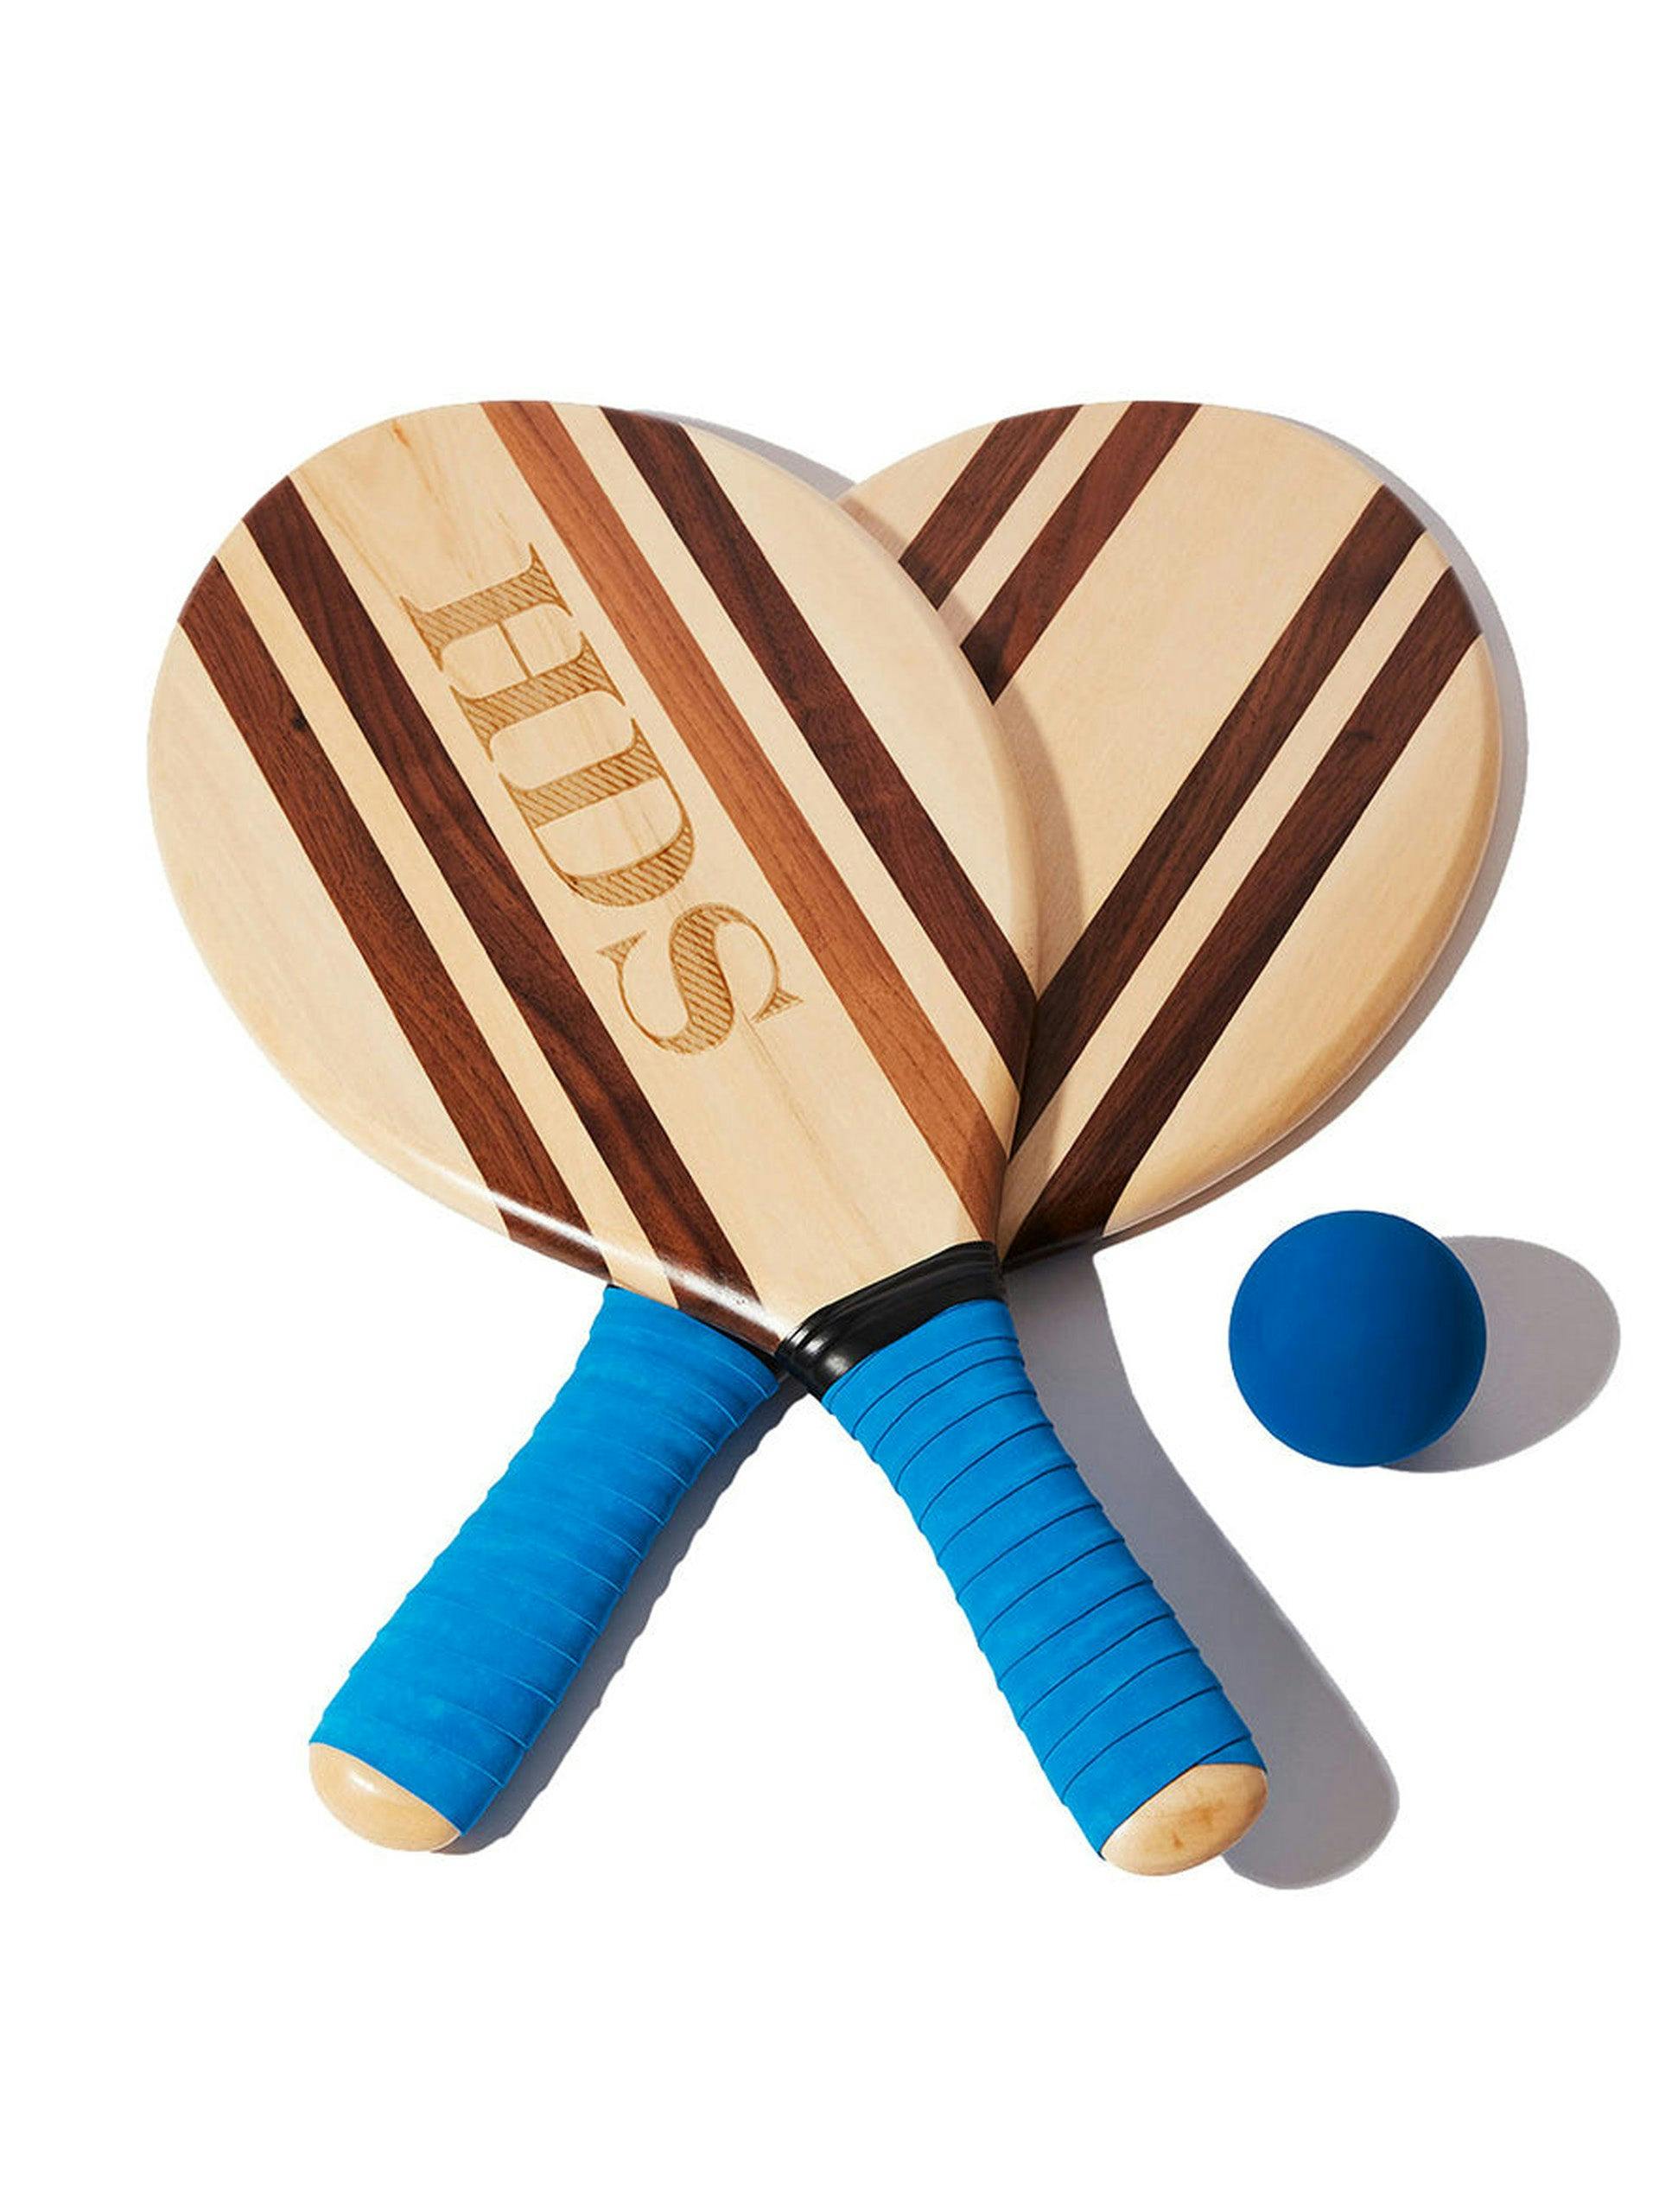 Personalised bat and ball set